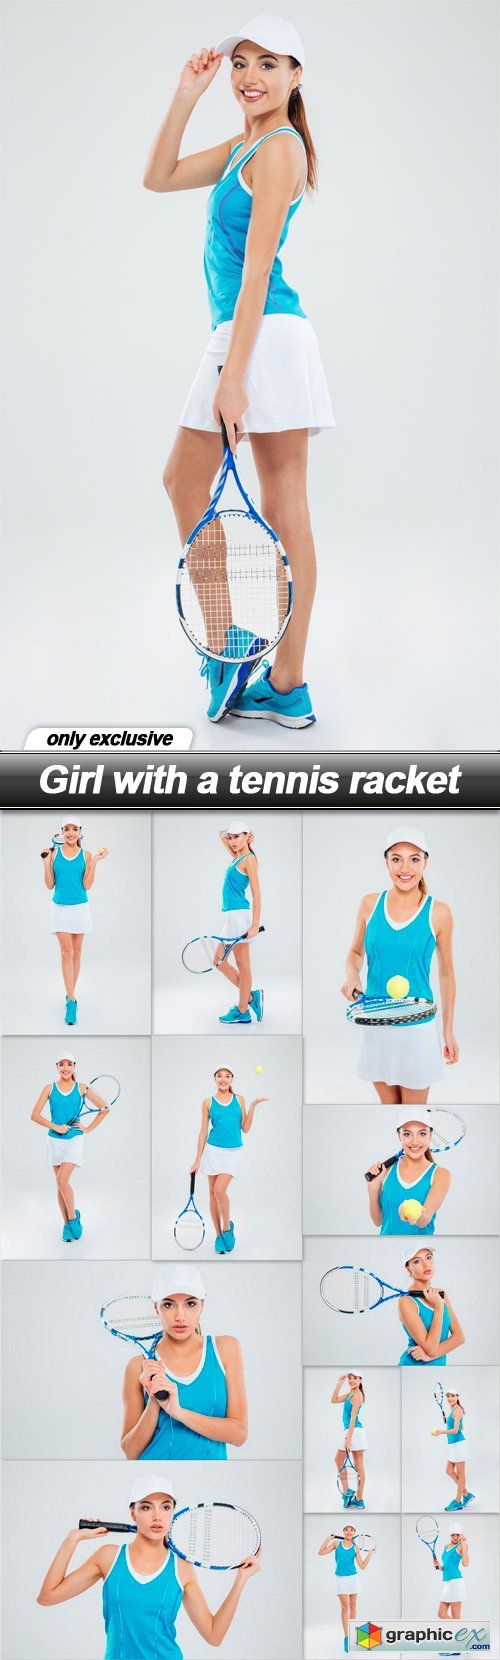 Girl with a tennis racket - 13 UHQ JPEG